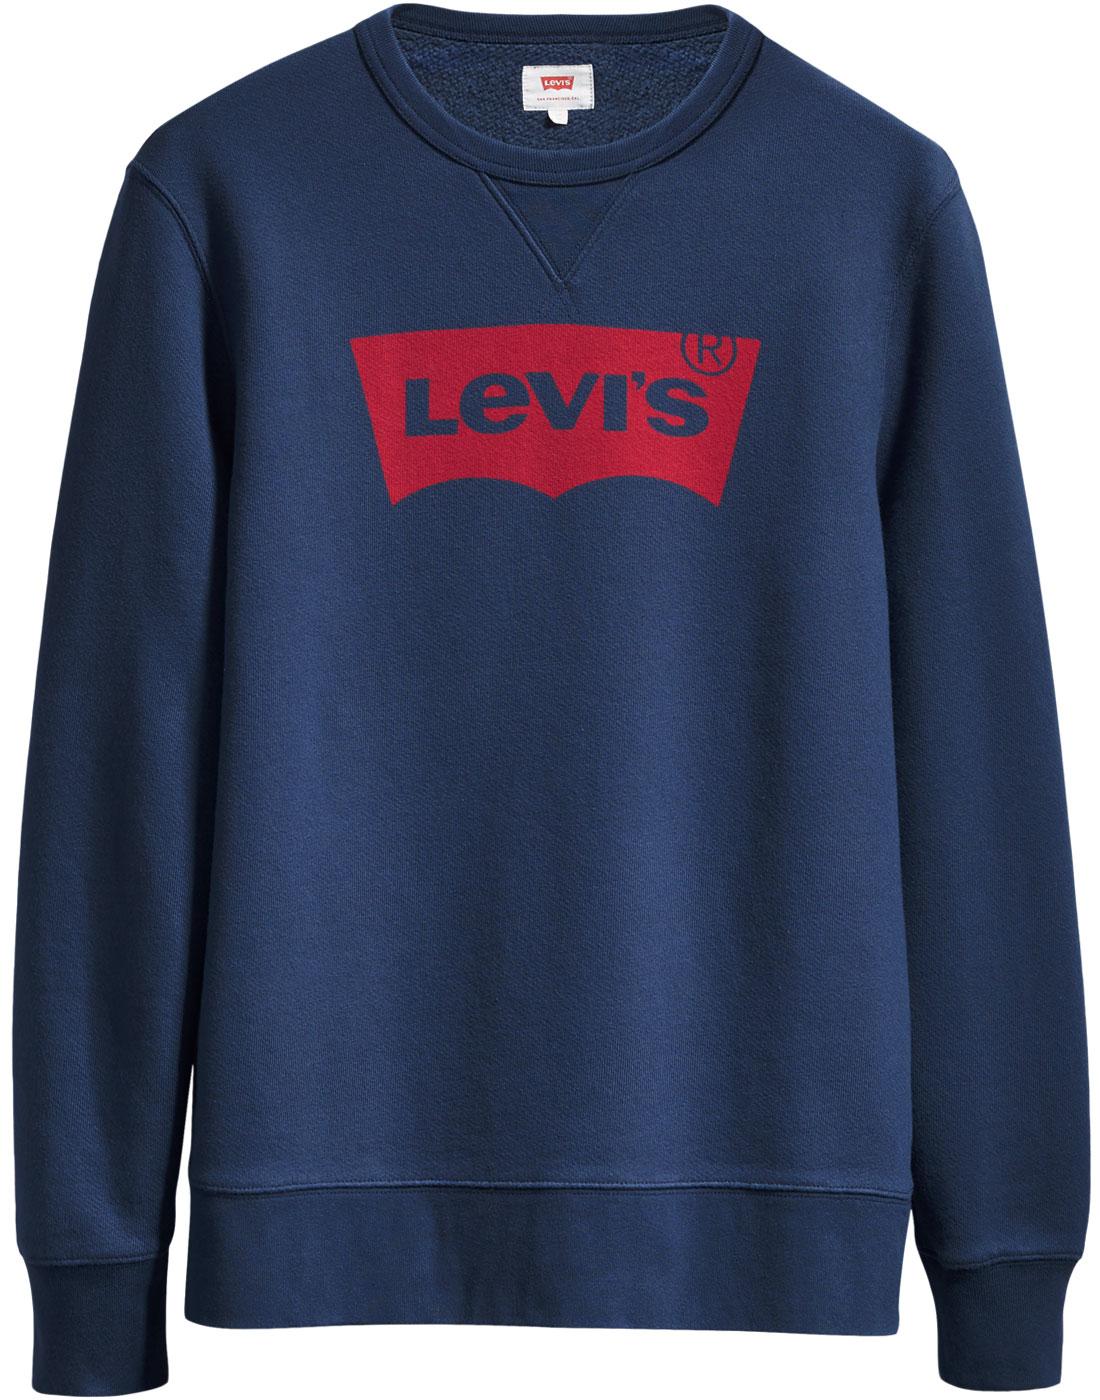 LEVI'S Retro 70s Batwing Graphic Crew Neck Sweatshirt Dress Blues